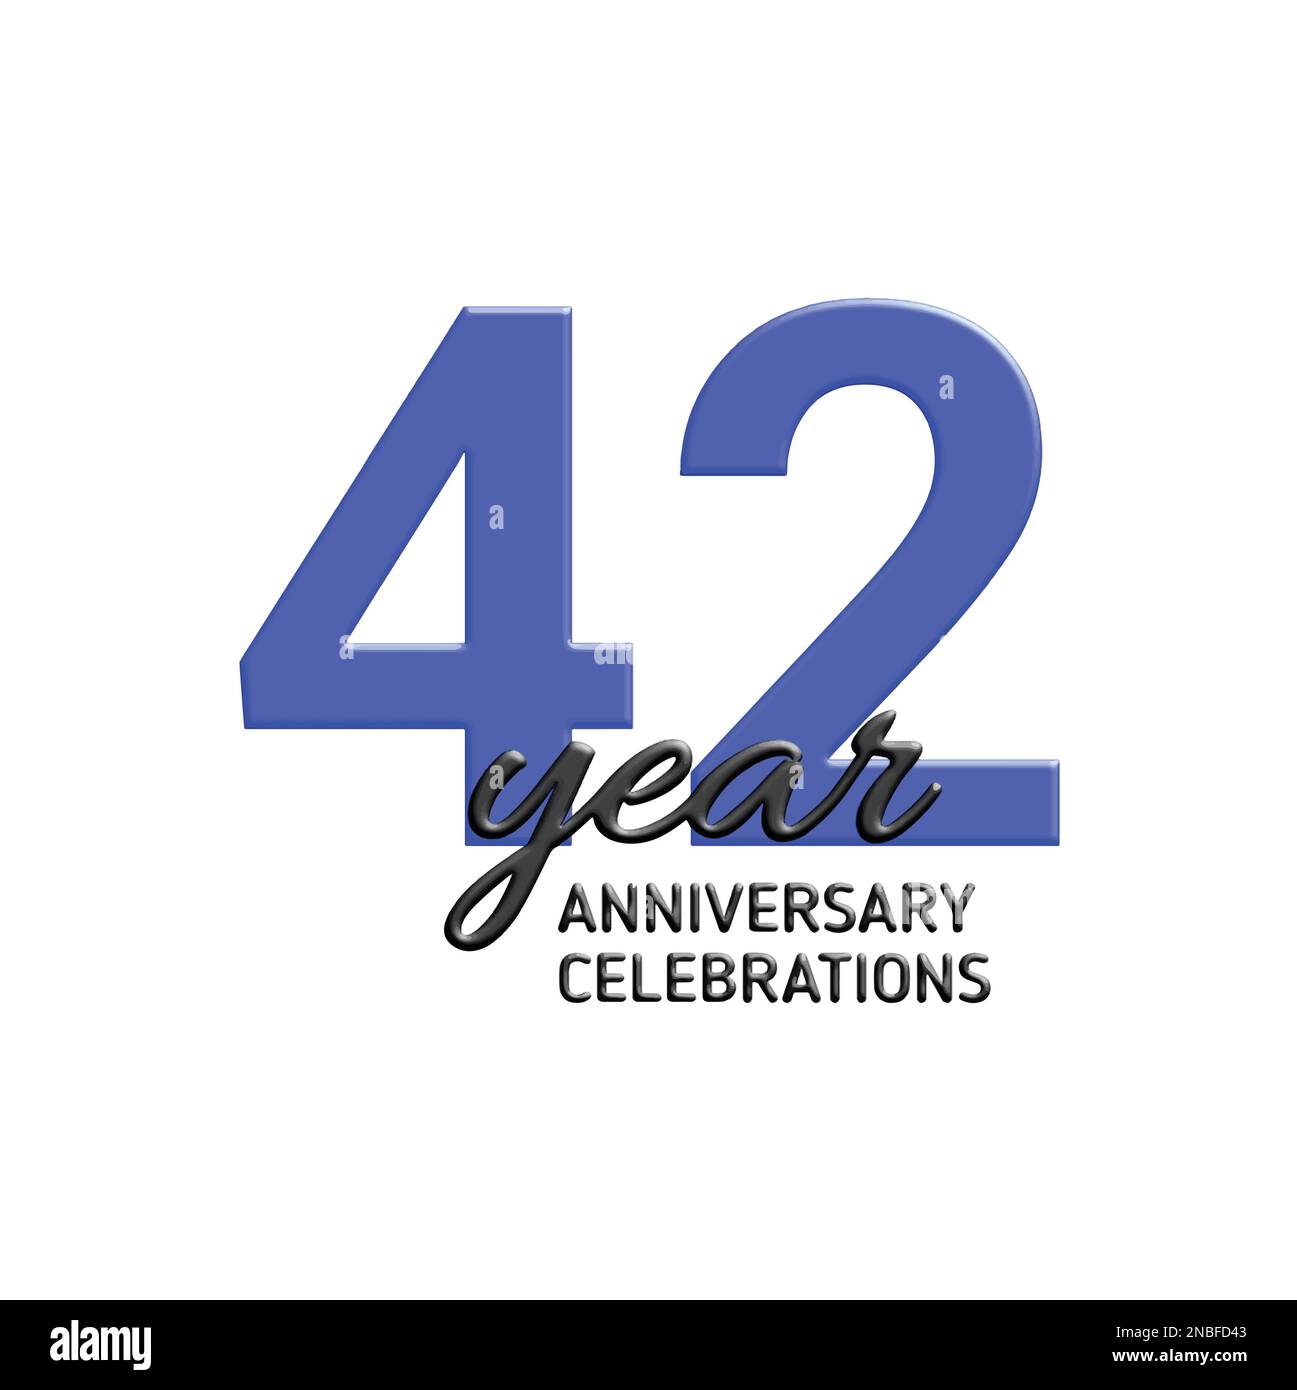 42th anniversary celebration logo design. Vector festive illustration. Realistic 3d sign. Party event decoration Stock Vector